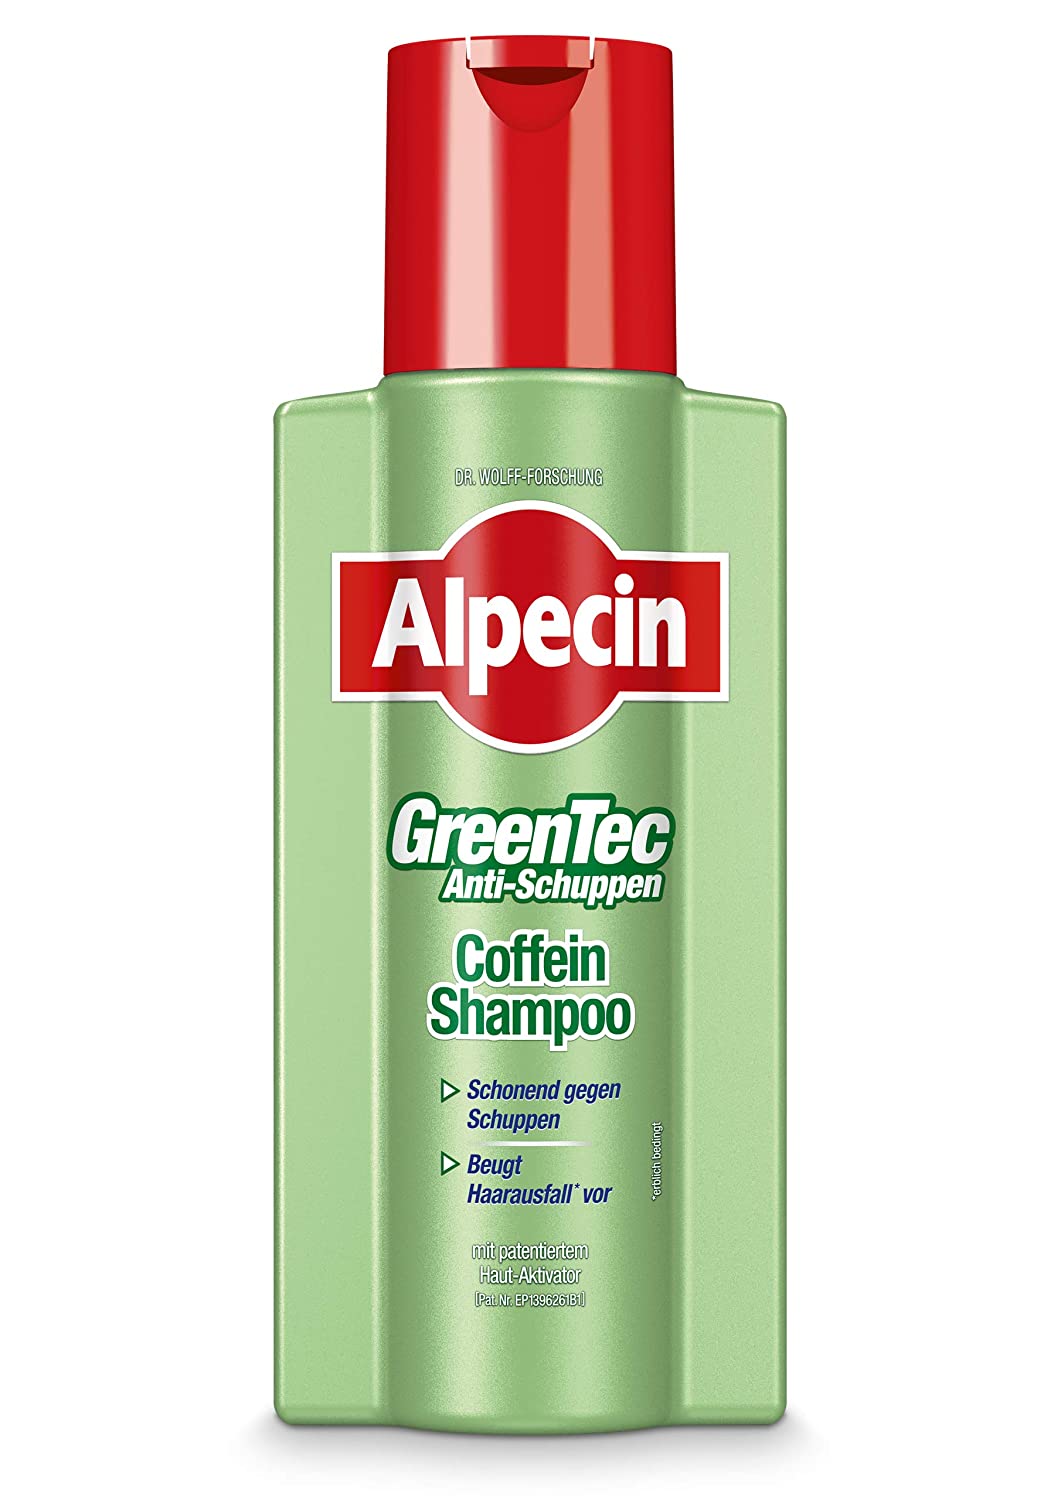 Alpecin GreenTec Anti-Dandruff Shampoo, 2 x 250 ml - The Gentle Solution for Flaky Scalp